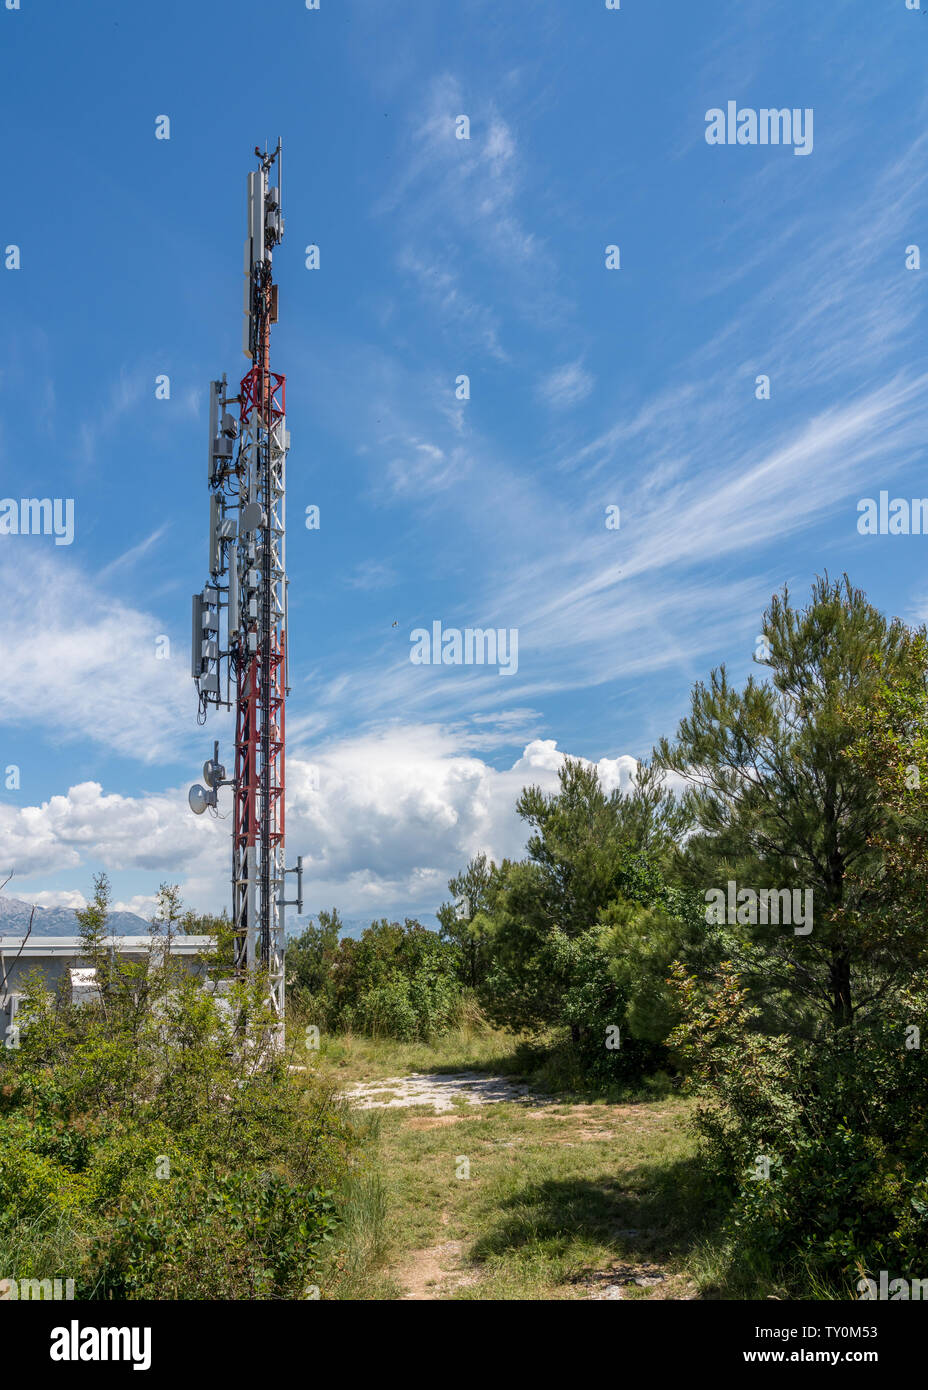 Rural cellphone tower in Croatia providing mobile phone service Stock Photo